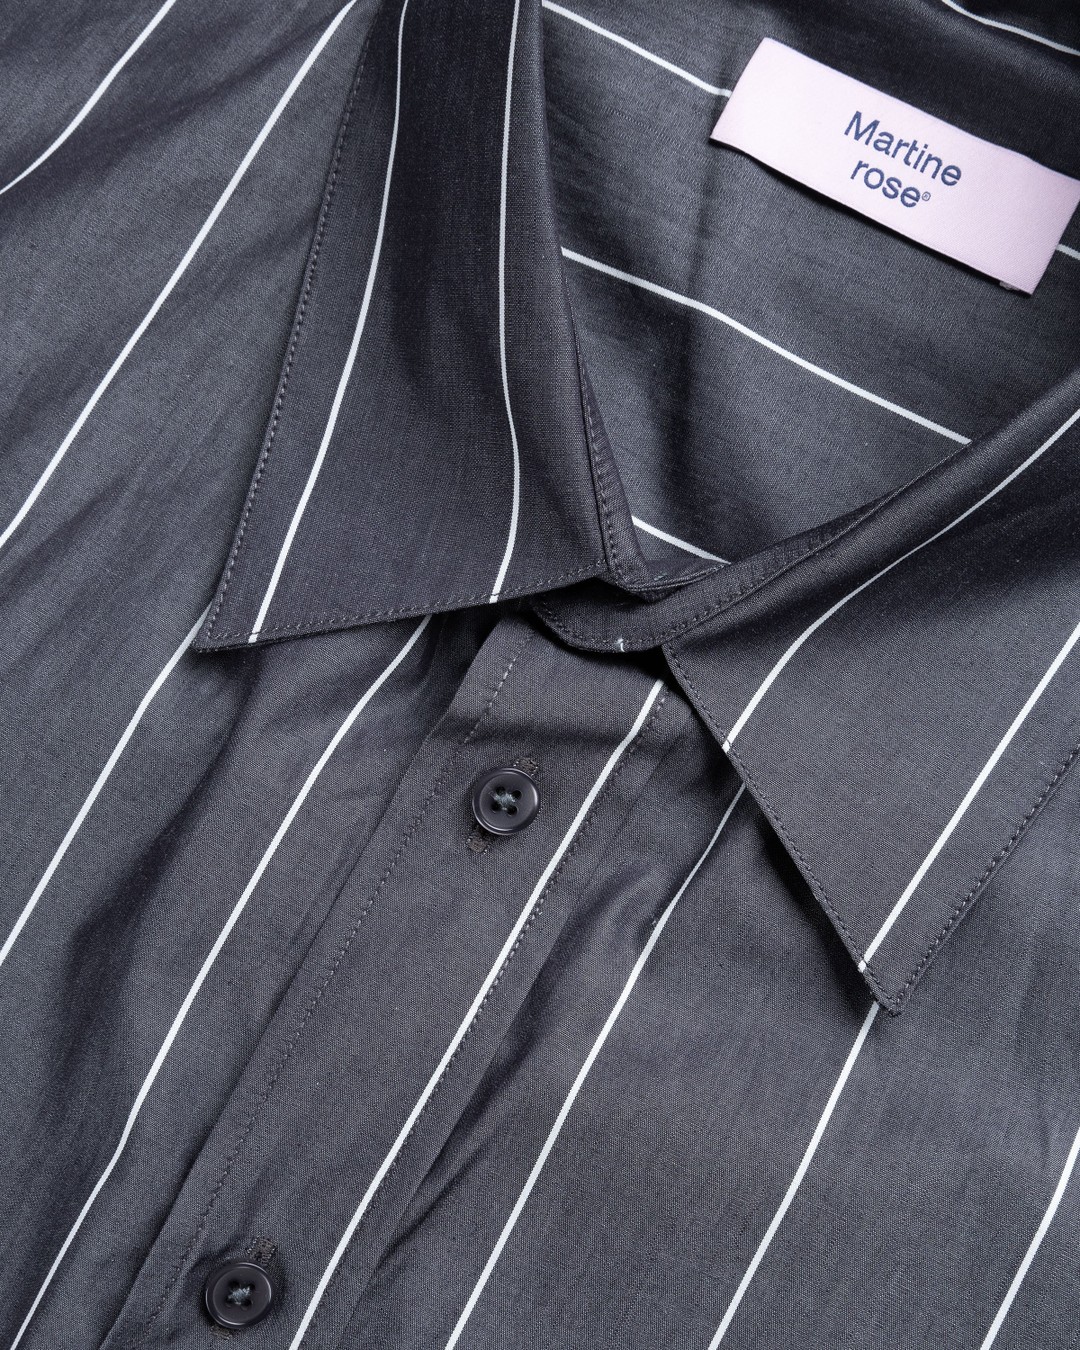 Martine Rose – Pulled Neck Shirt Grey/White - Shirts - Grey - Image 6